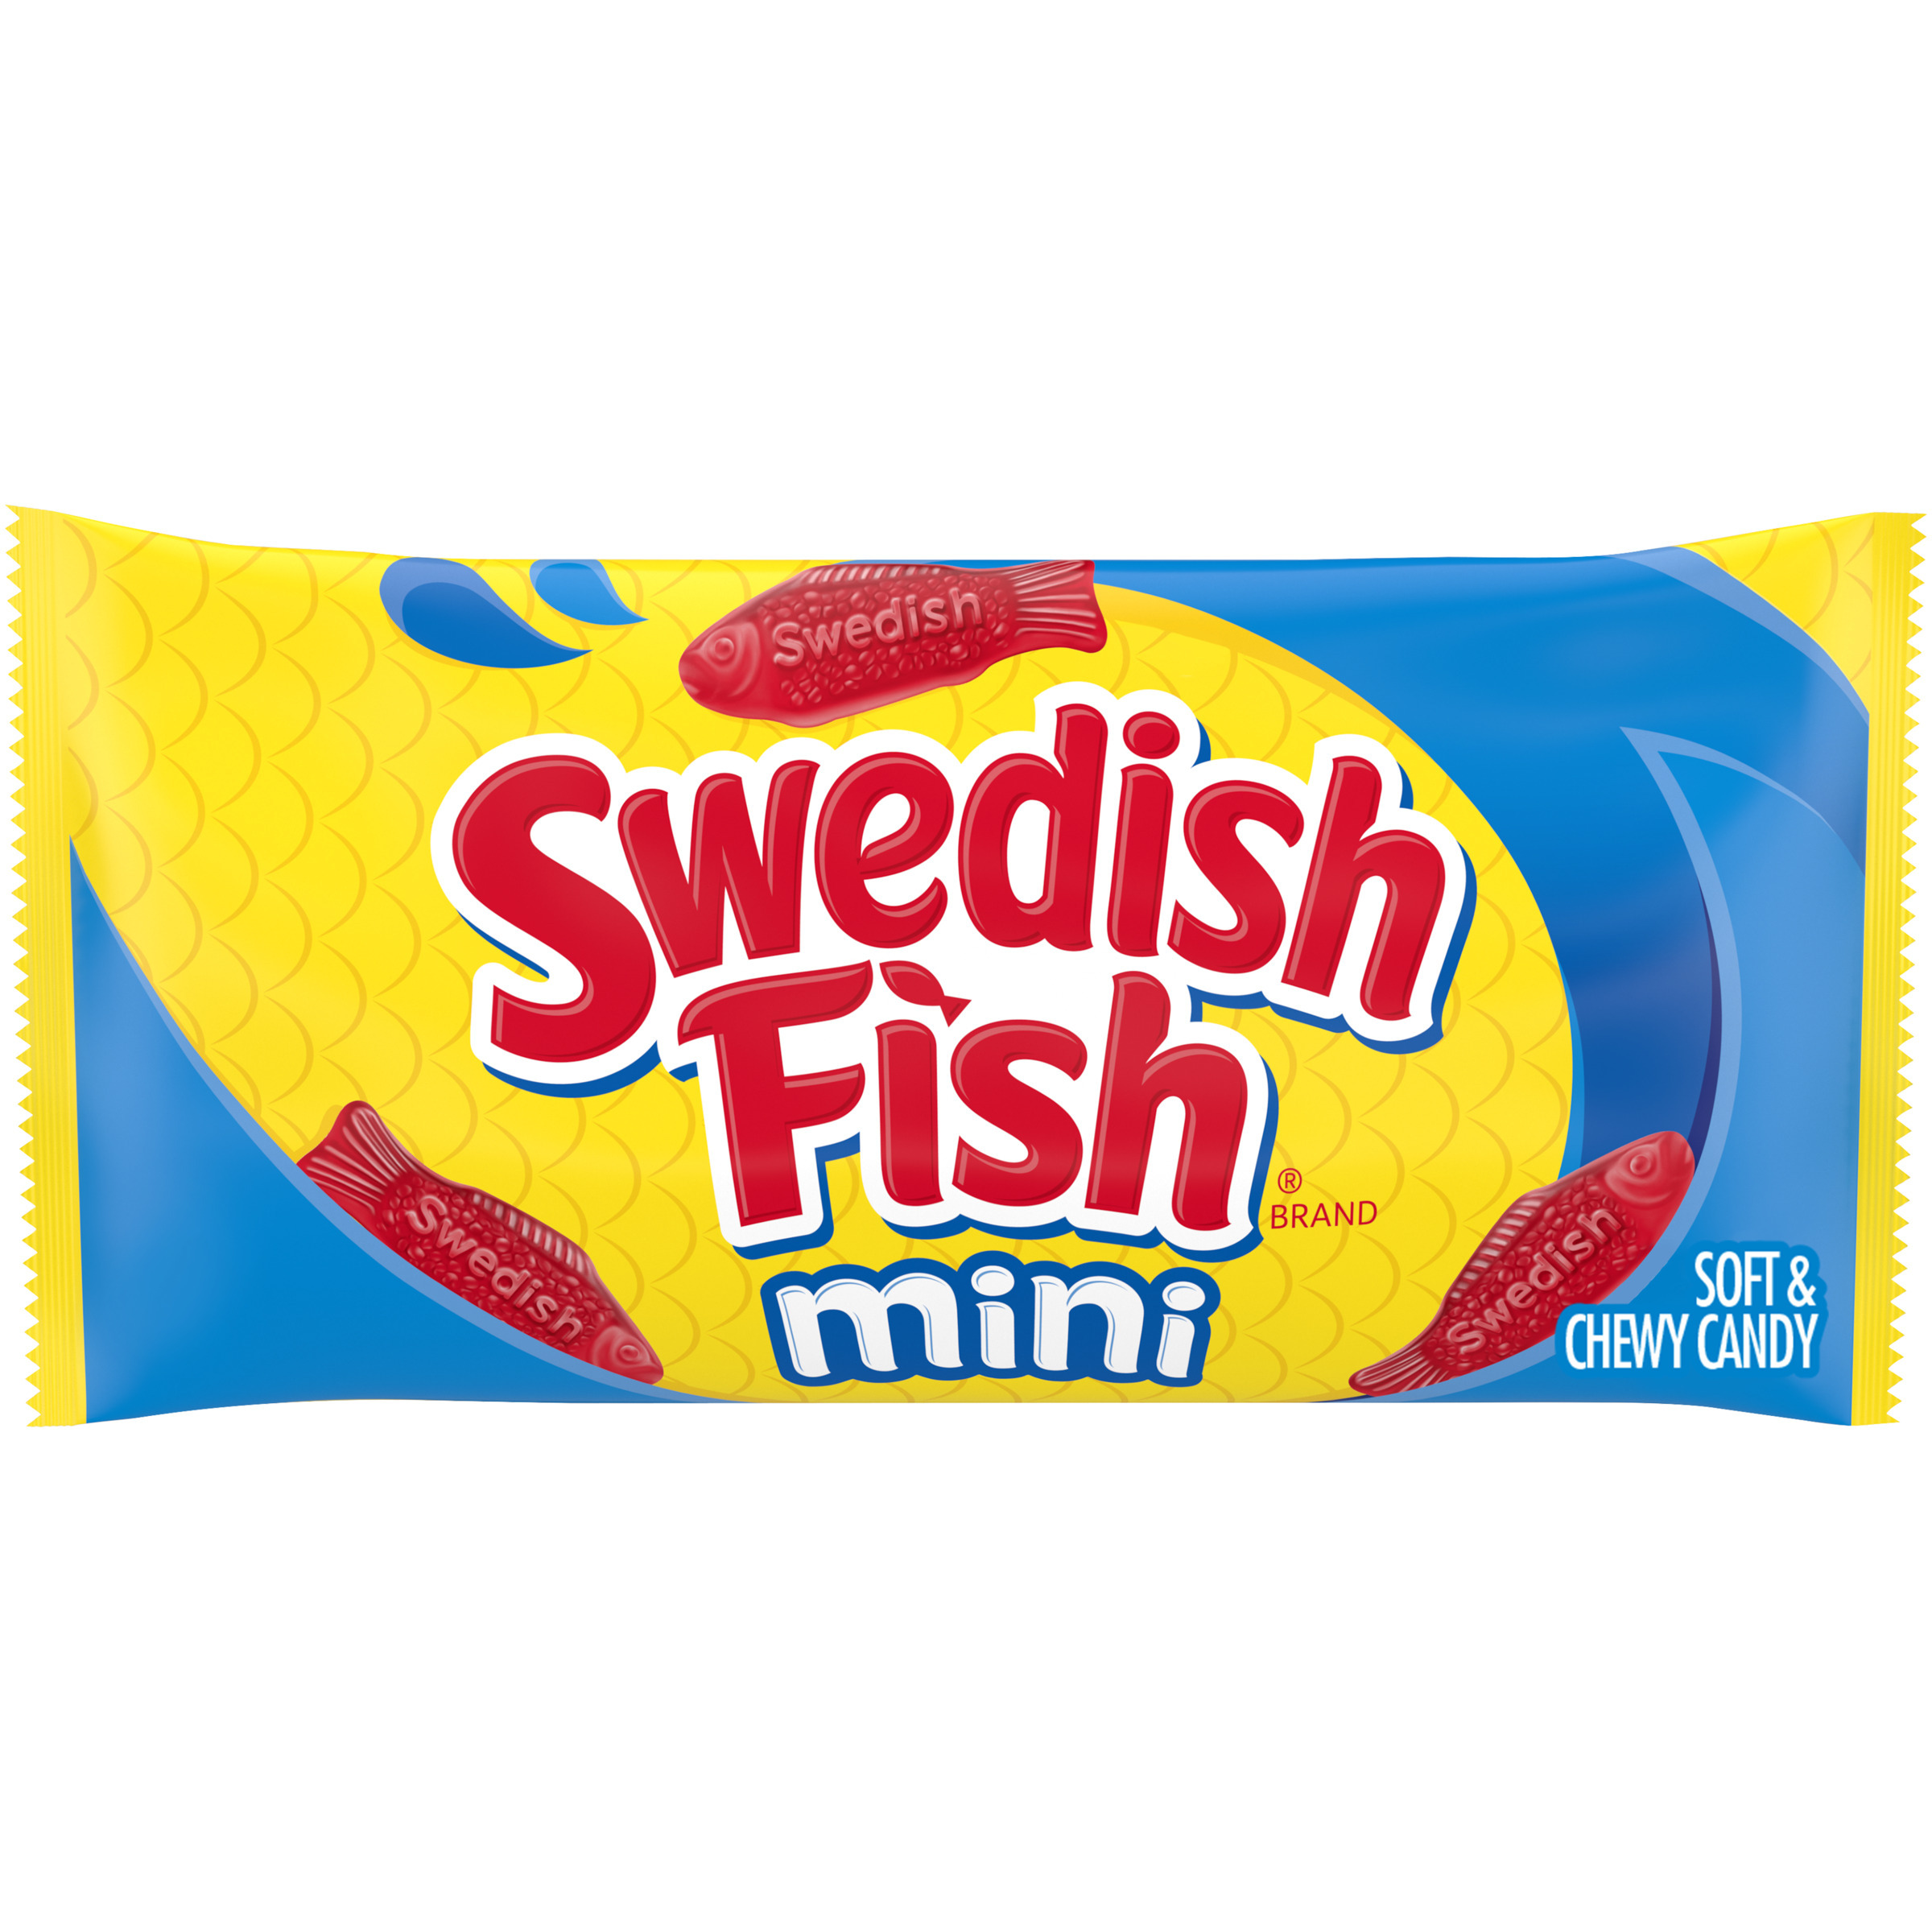 SWEDISH FISH Soft & Chewy Candy, 2 oz